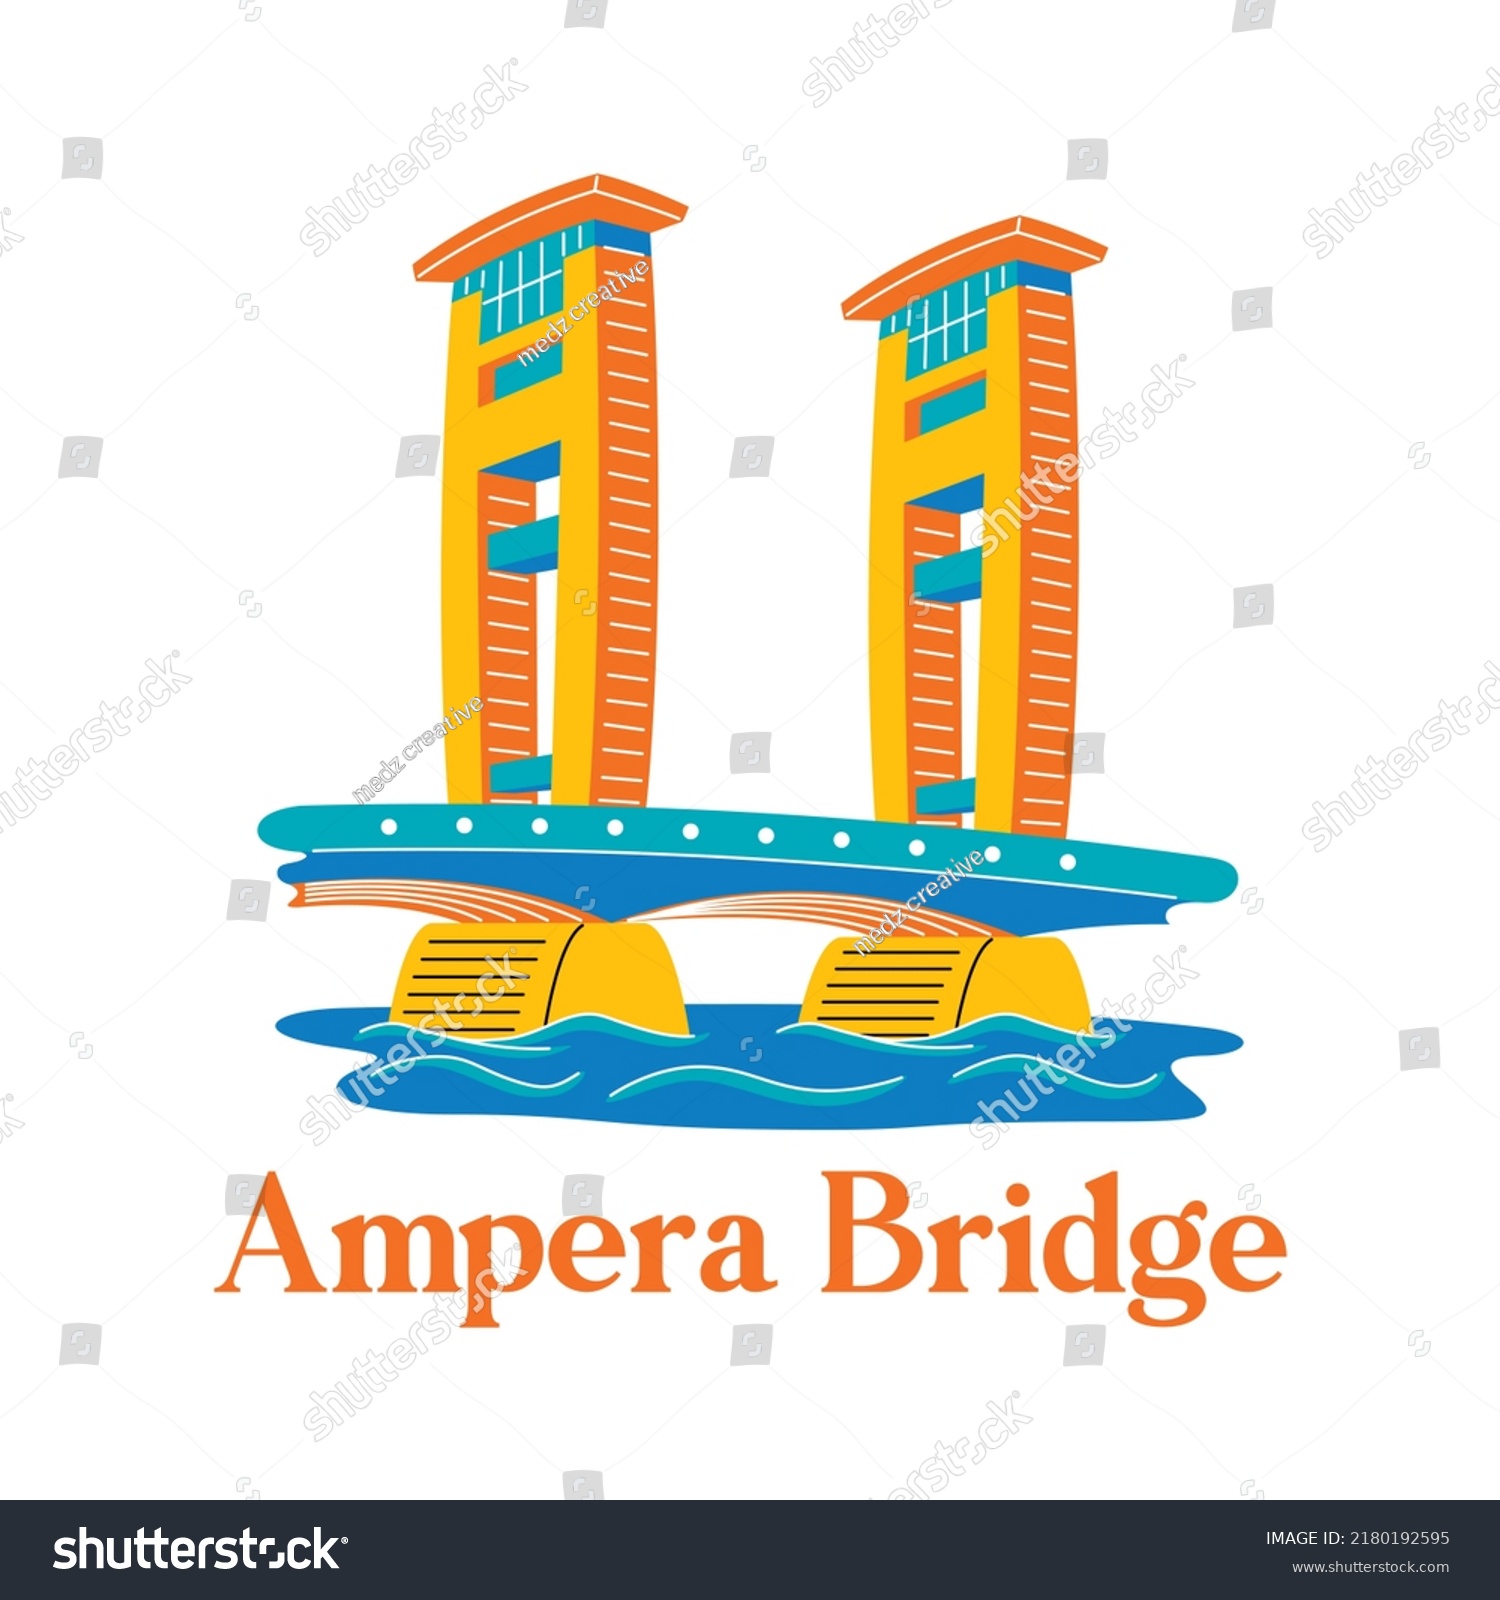 SVG of Ampera Bridge in flat design style svg